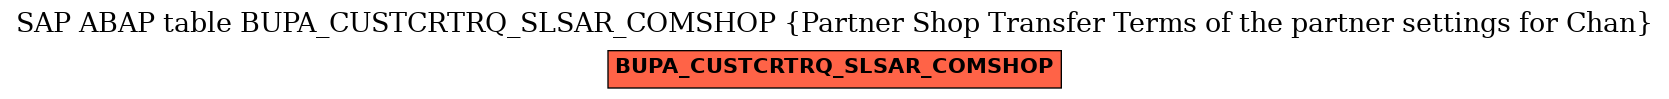 E-R Diagram for table BUPA_CUSTCRTRQ_SLSAR_COMSHOP (Partner Shop Transfer Terms of the partner settings for Chan)